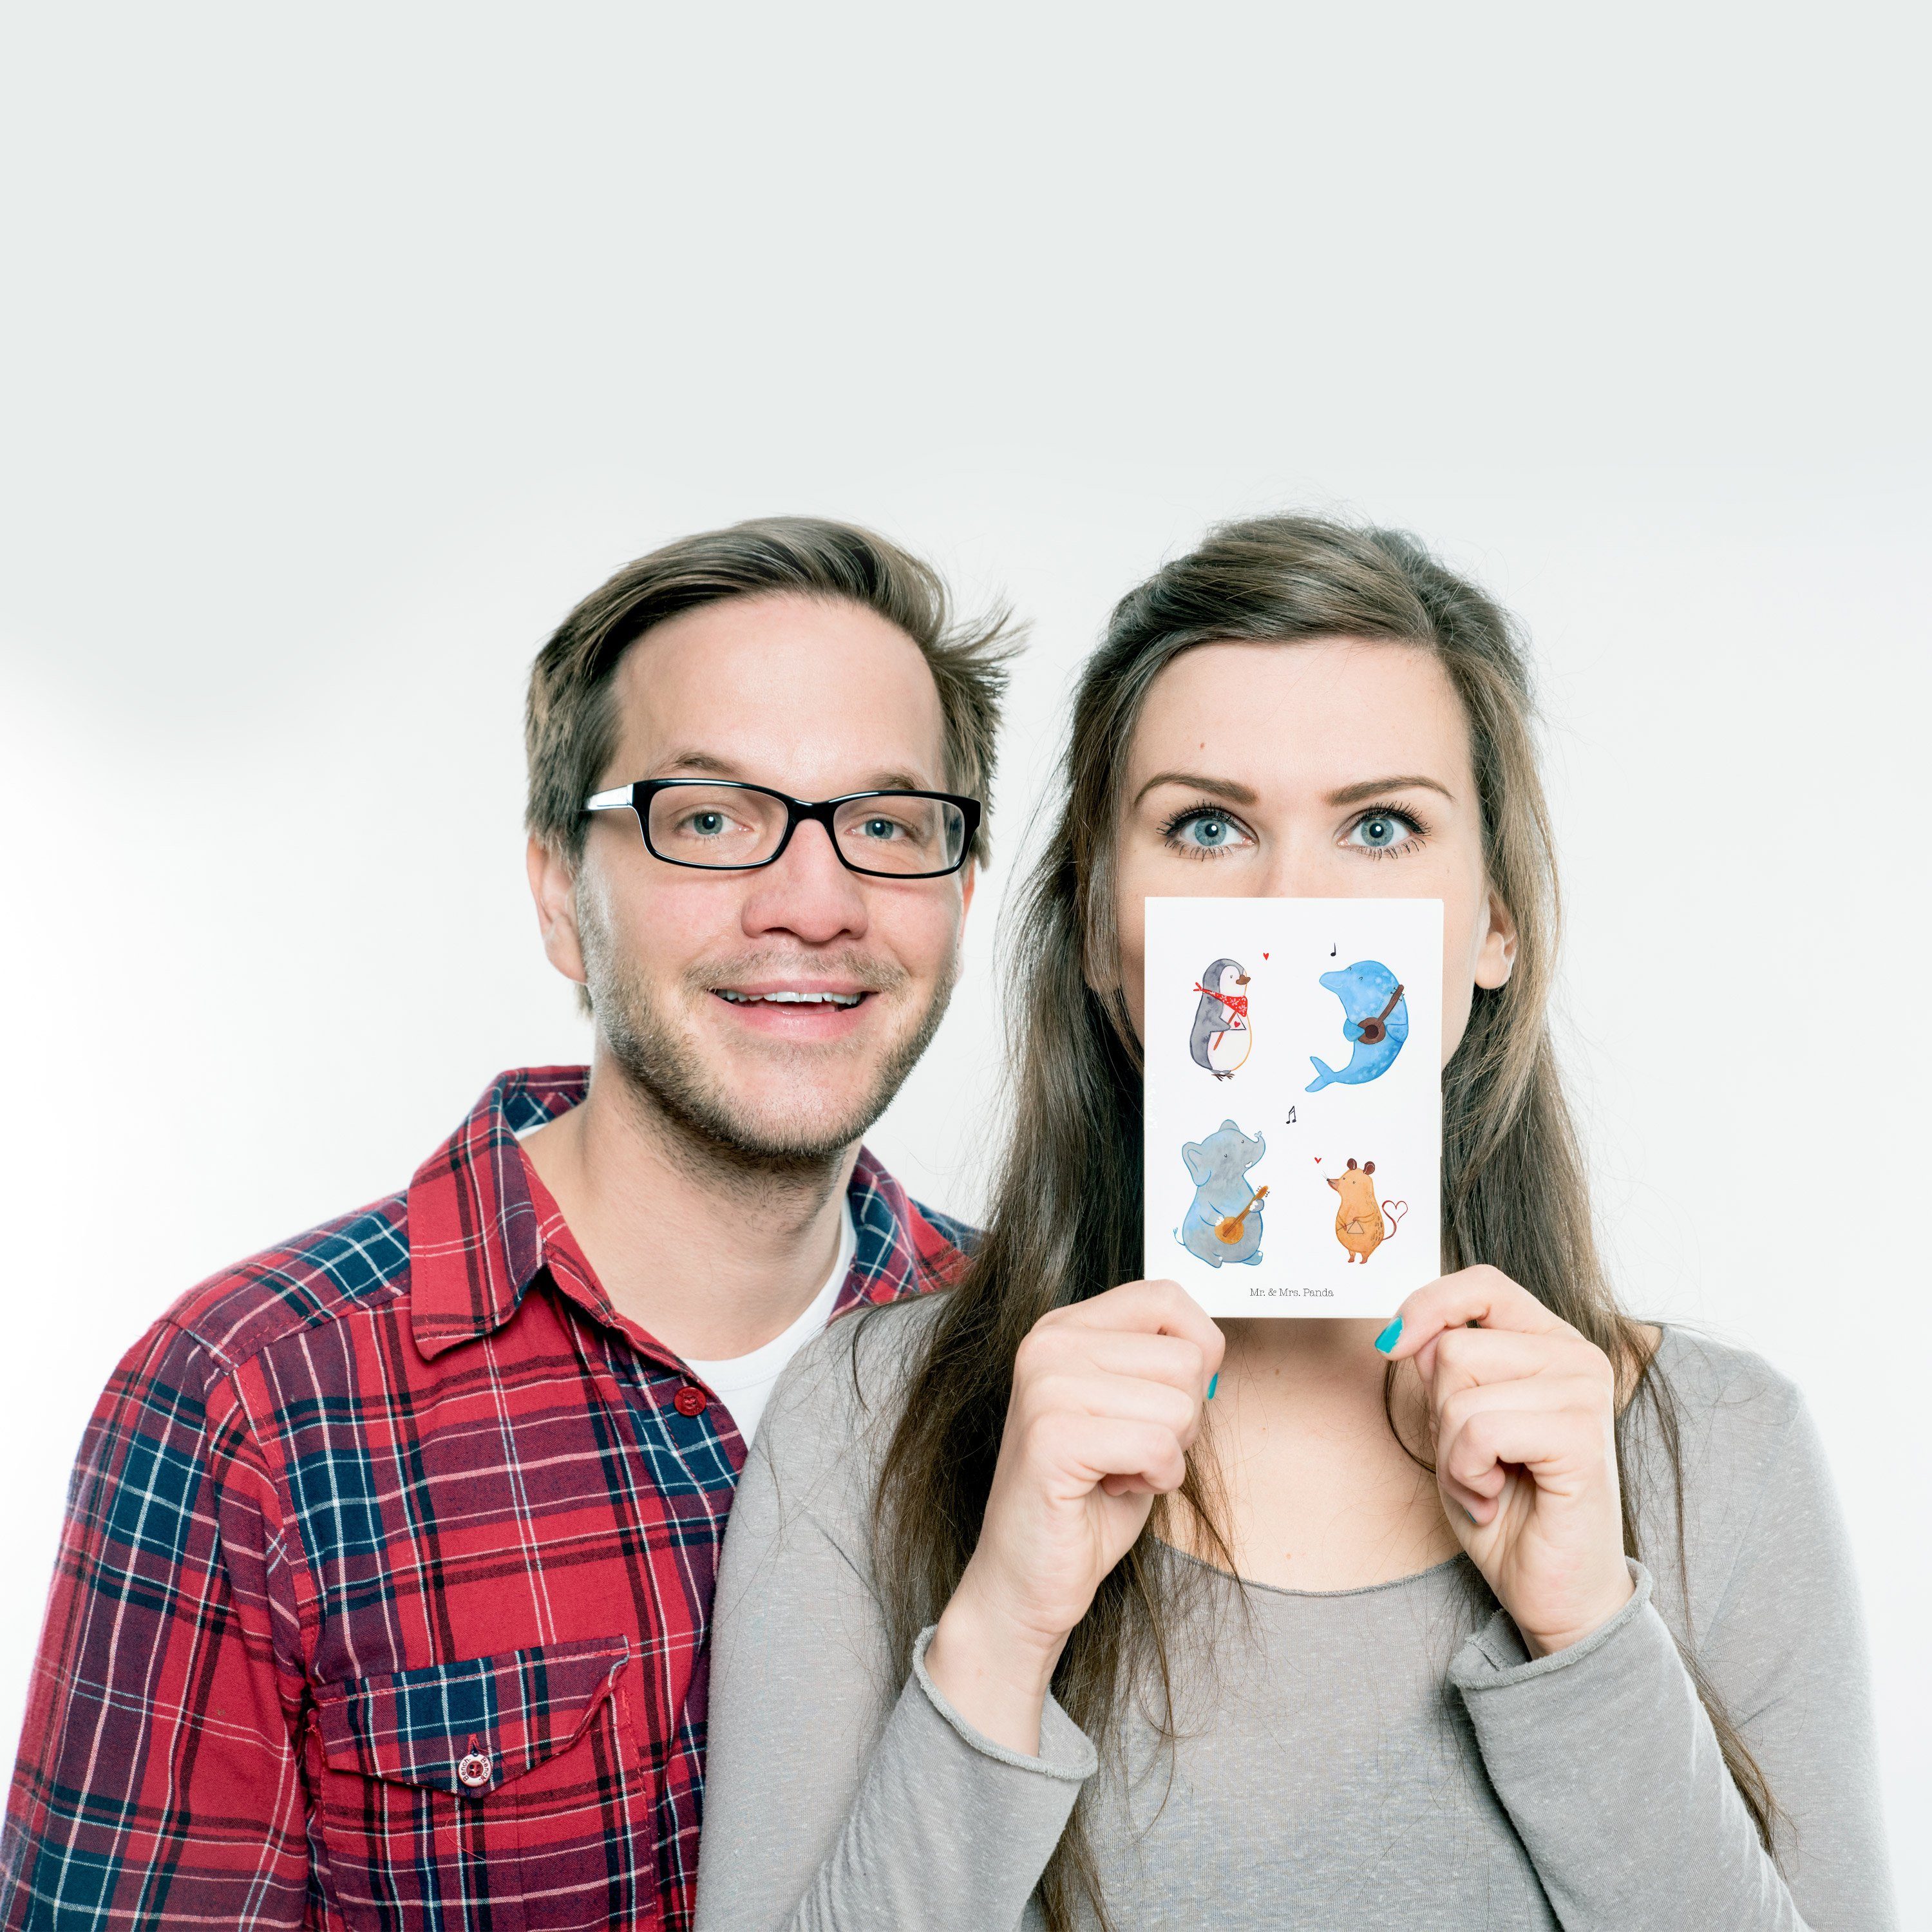 Mr. & Mrs. Panda Postkarte Geschenk, - Geschenkkarte, Weiß - Tiermotive, Big Band Geburtstagskar